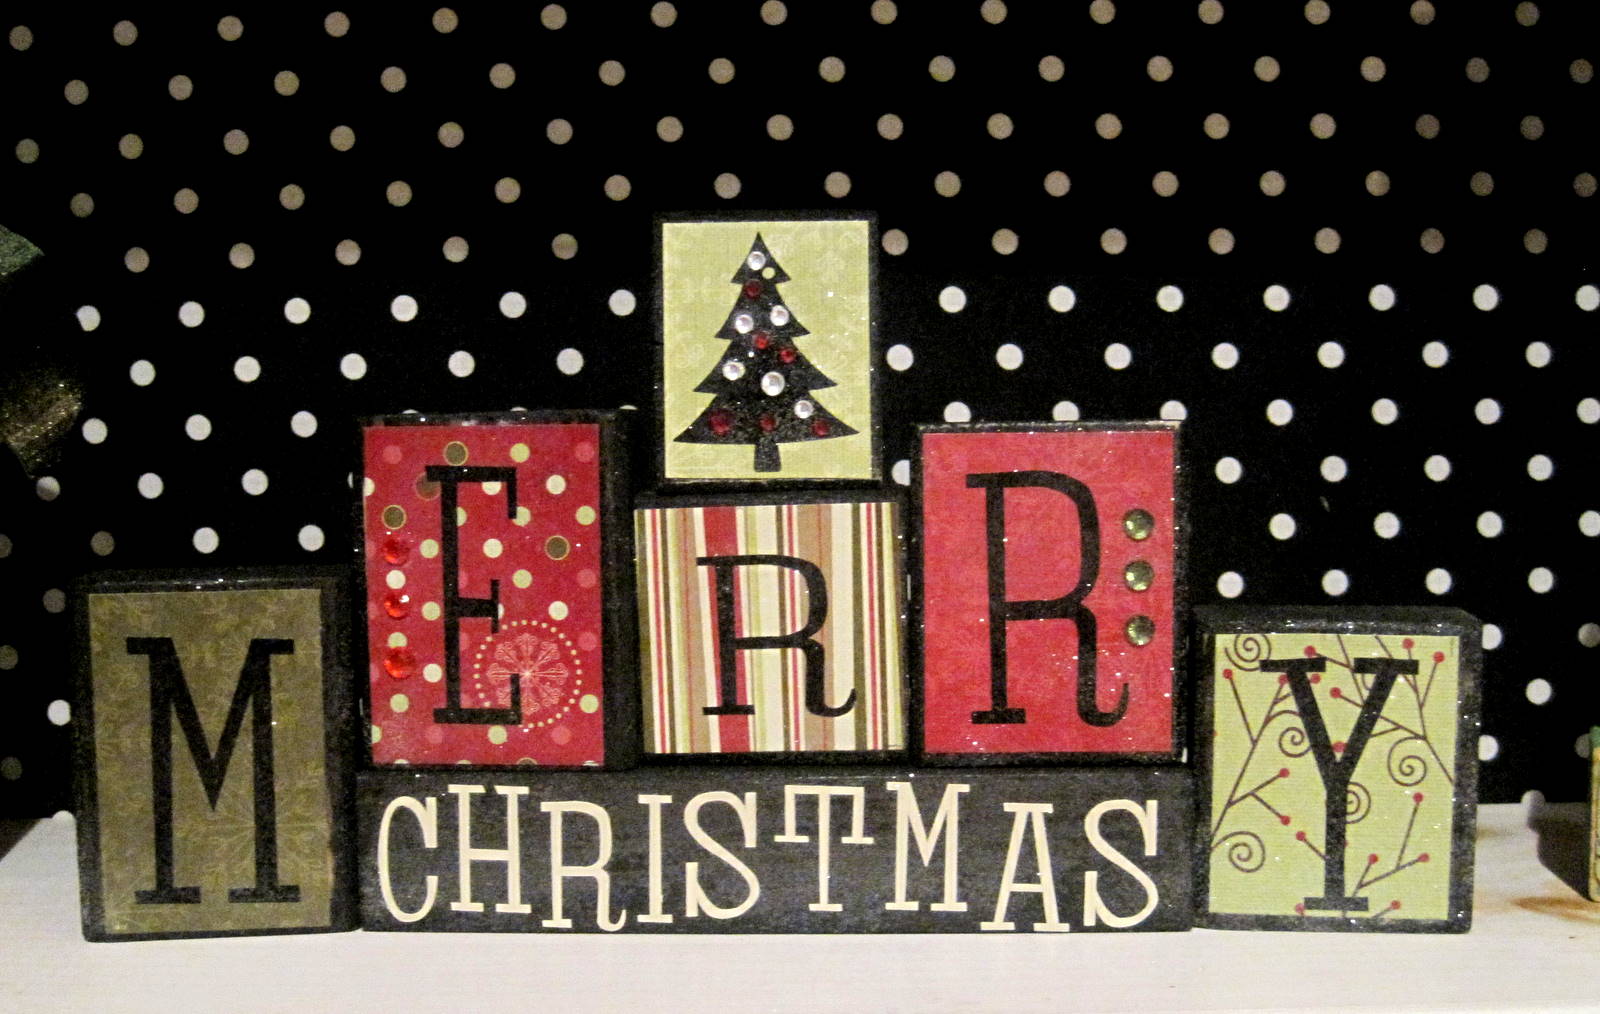 Fun Christmas blocks made from an idea I found on Pinterest.